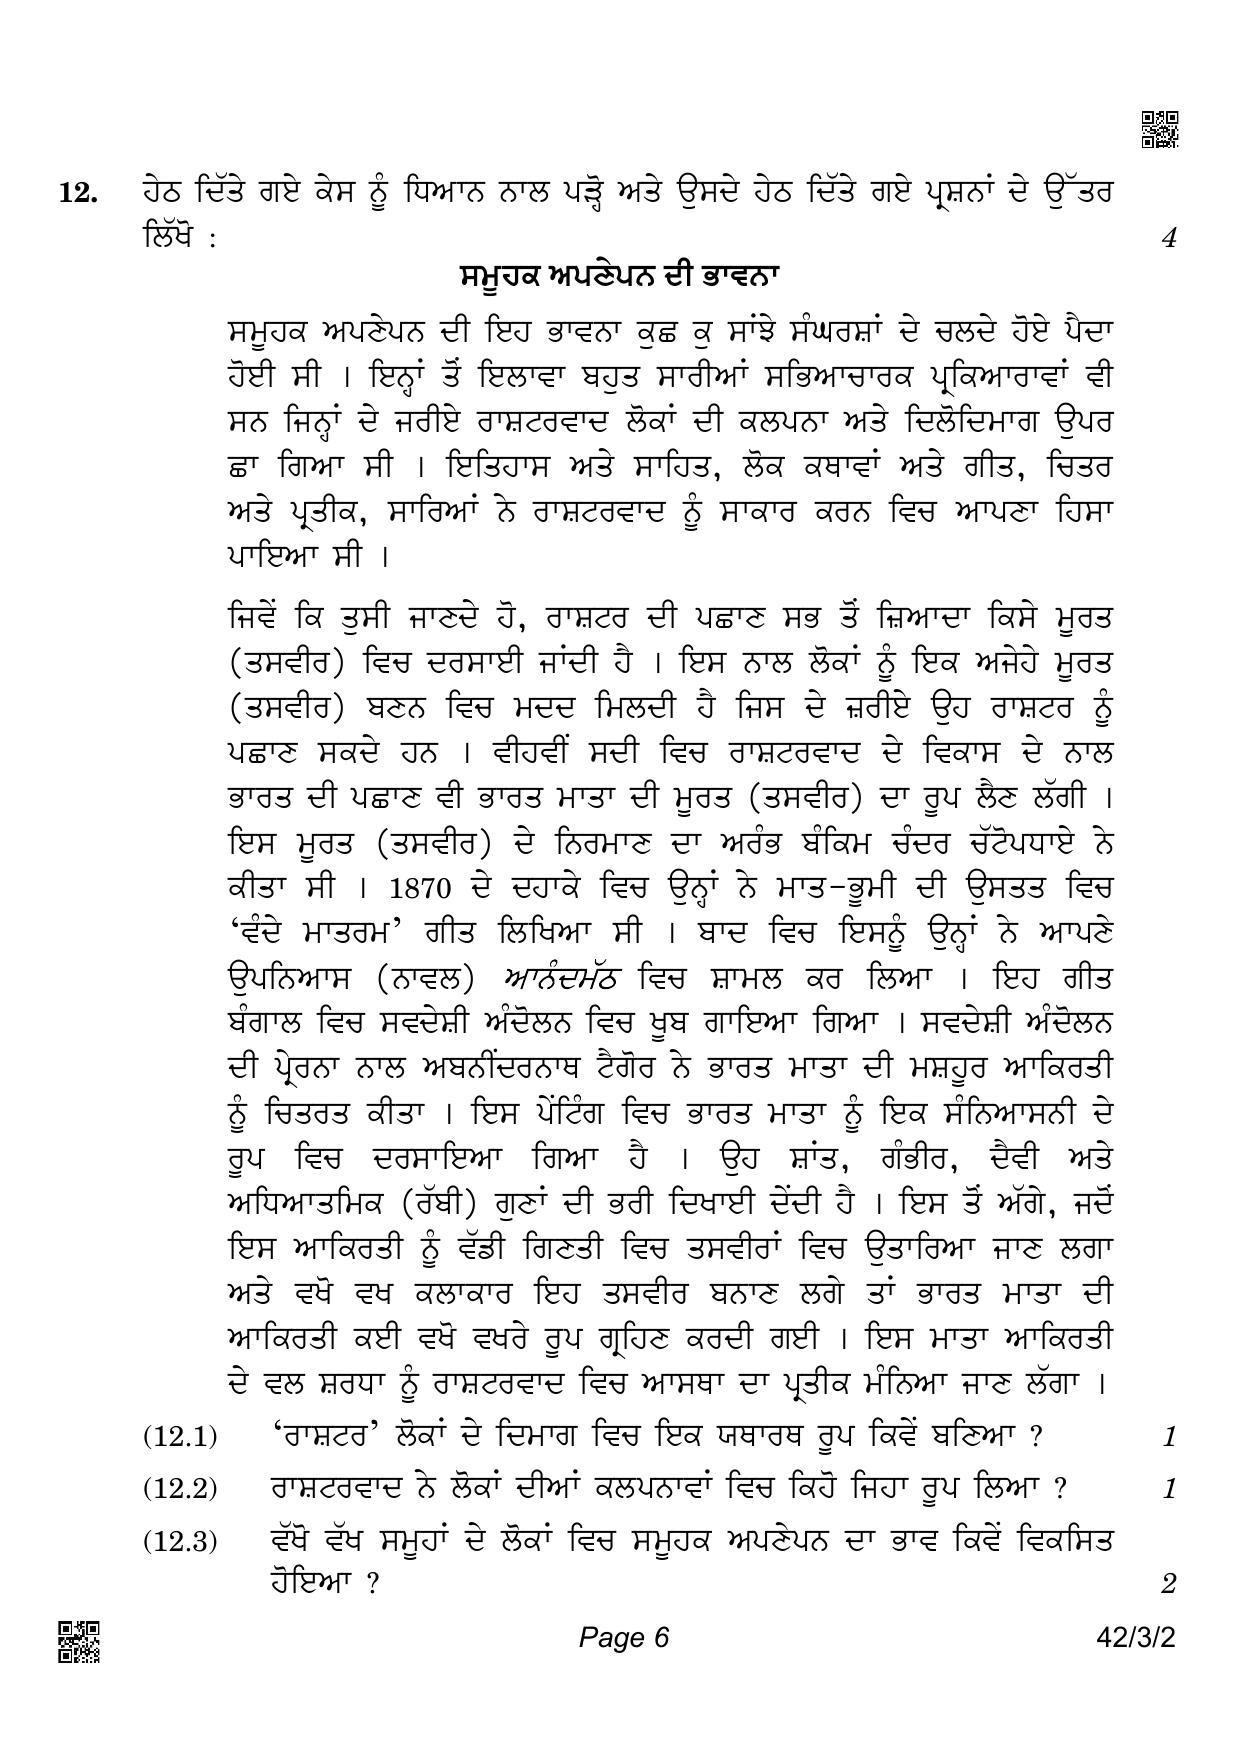 CBSE Class 10 42-3-2 Social Science Punjabi Version 2022 Question Paper - Page 6